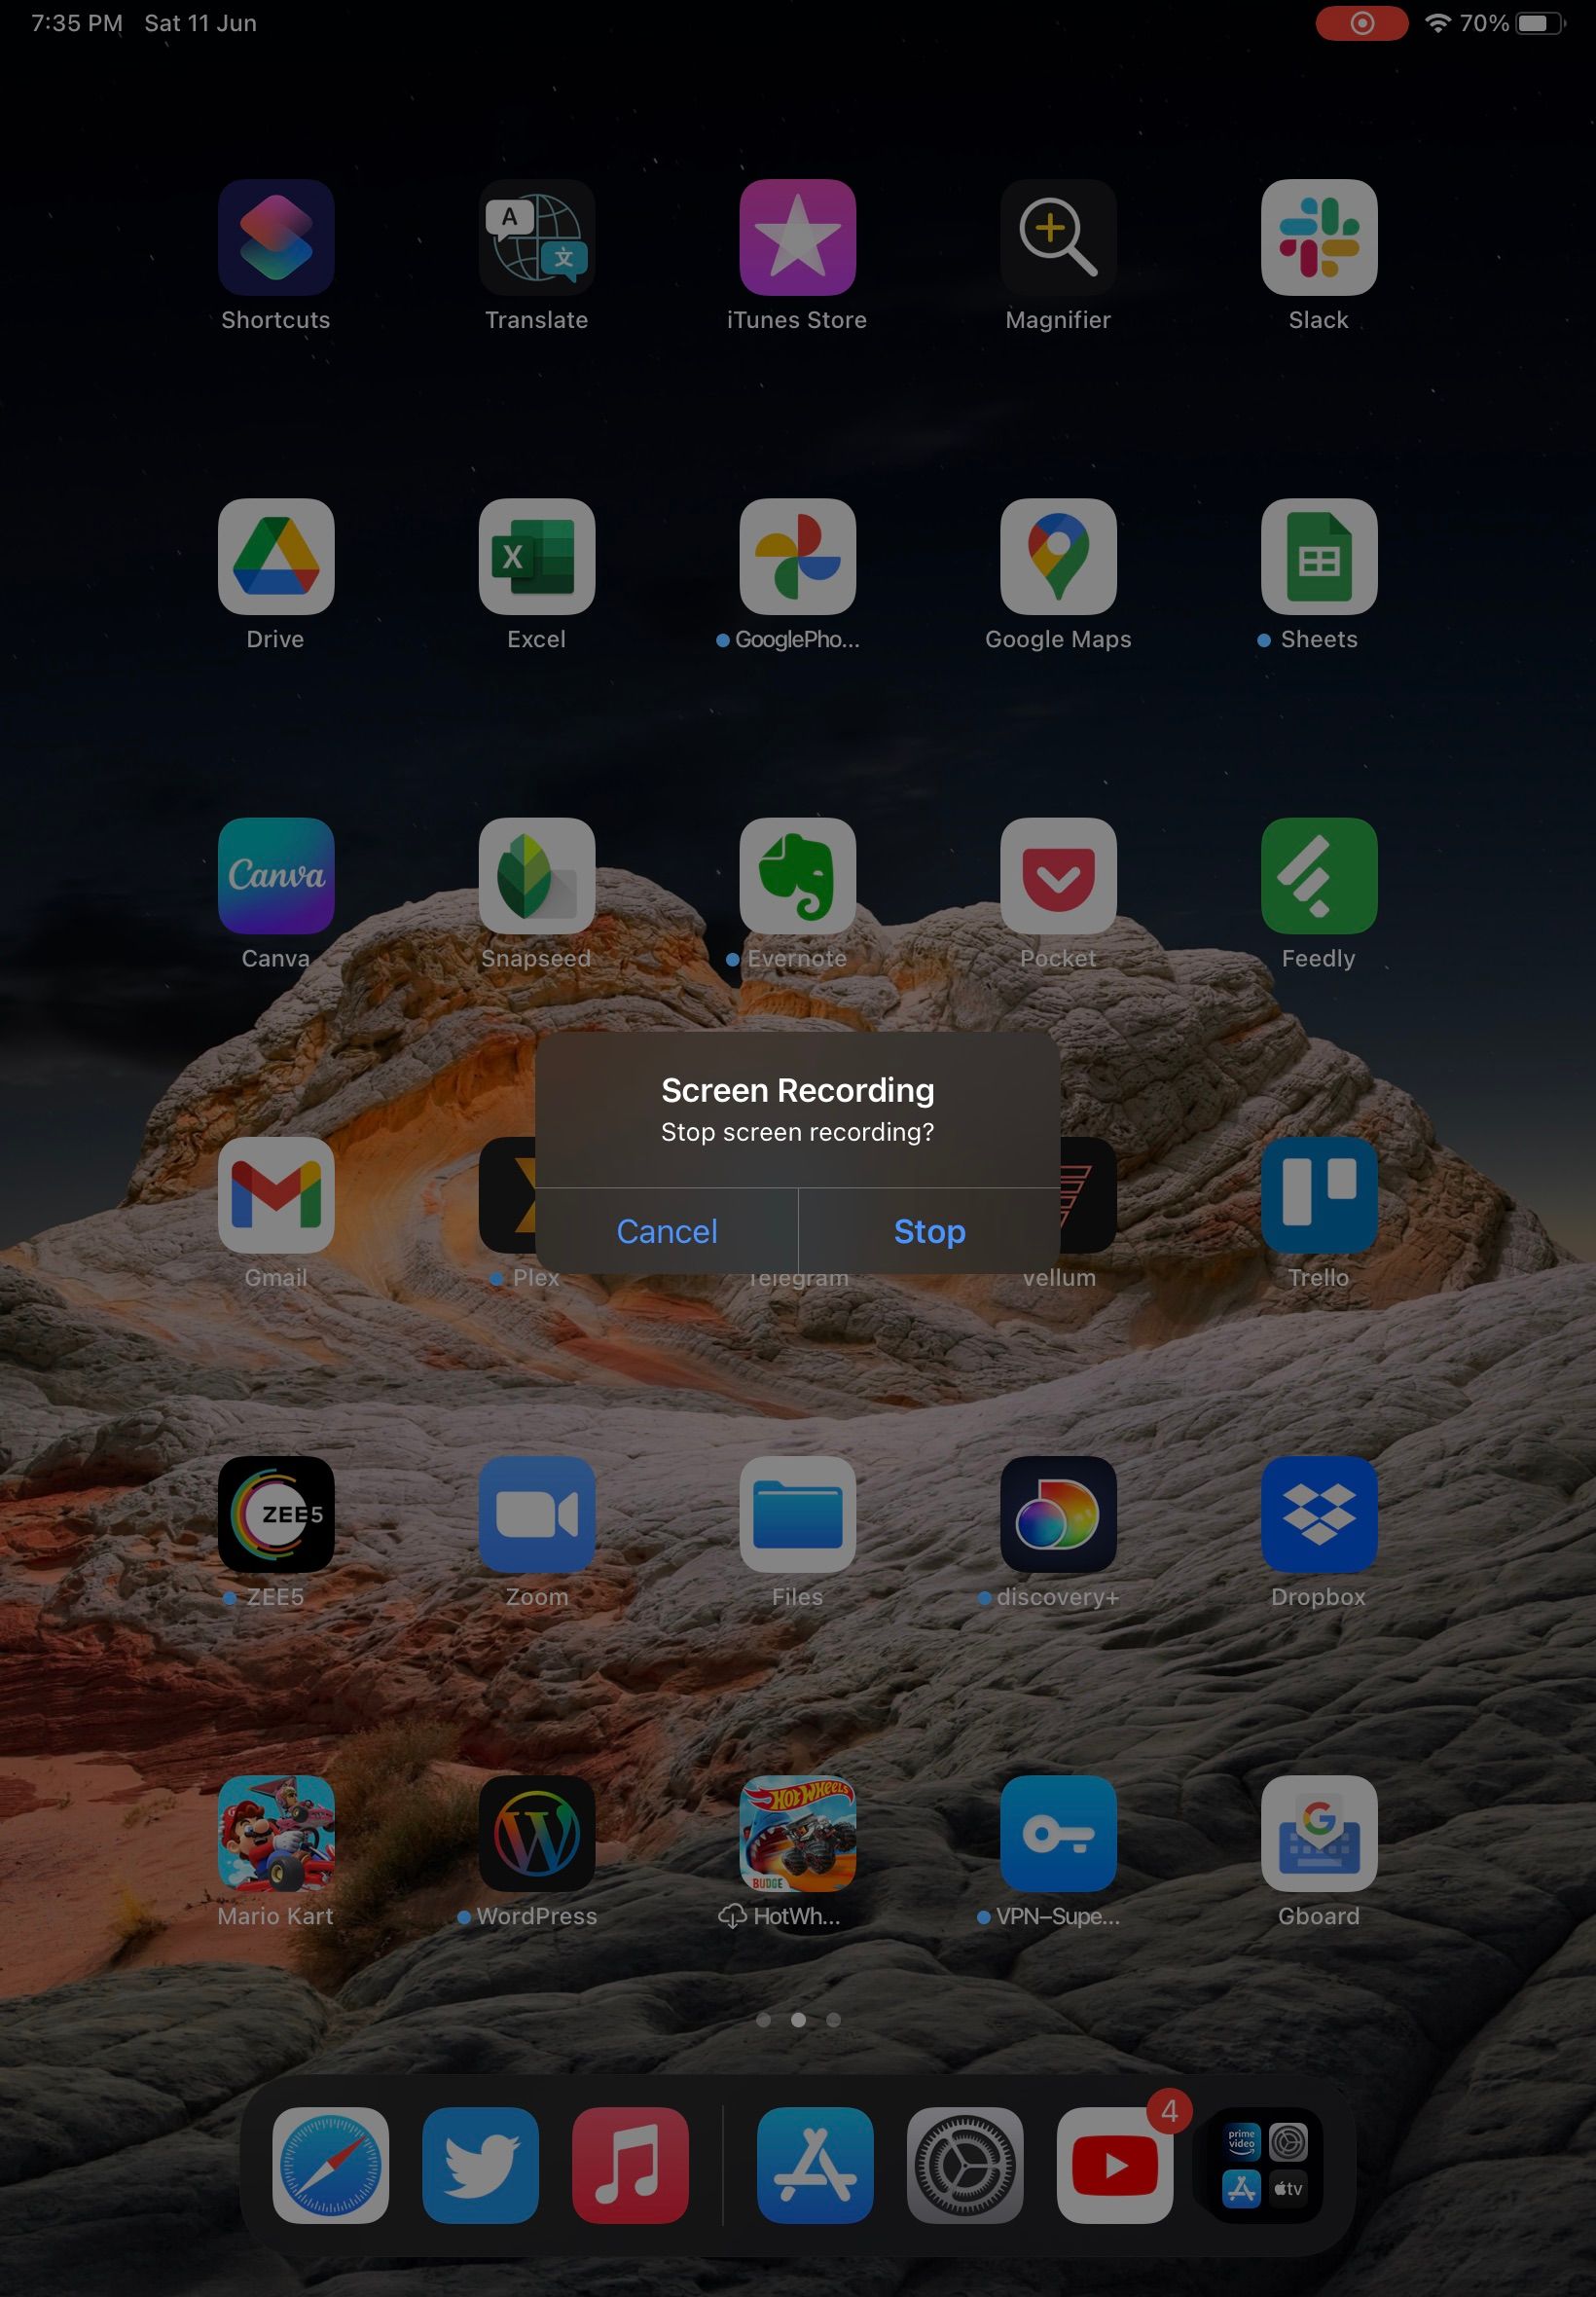 iPad stop screen recording